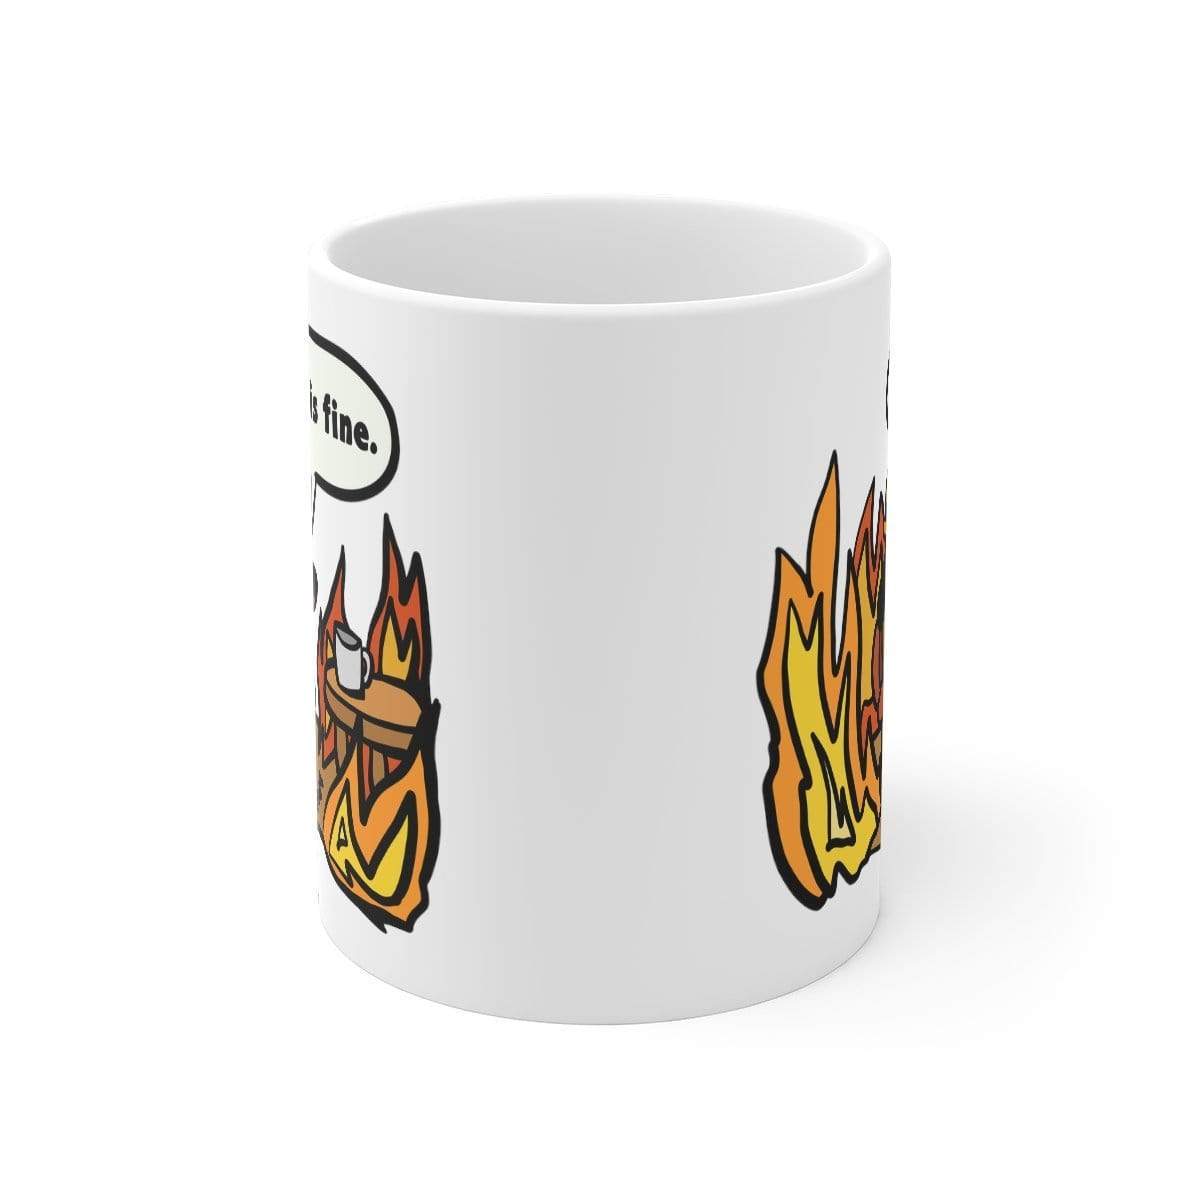 This Is Fine 🔥 - Coffee Mug